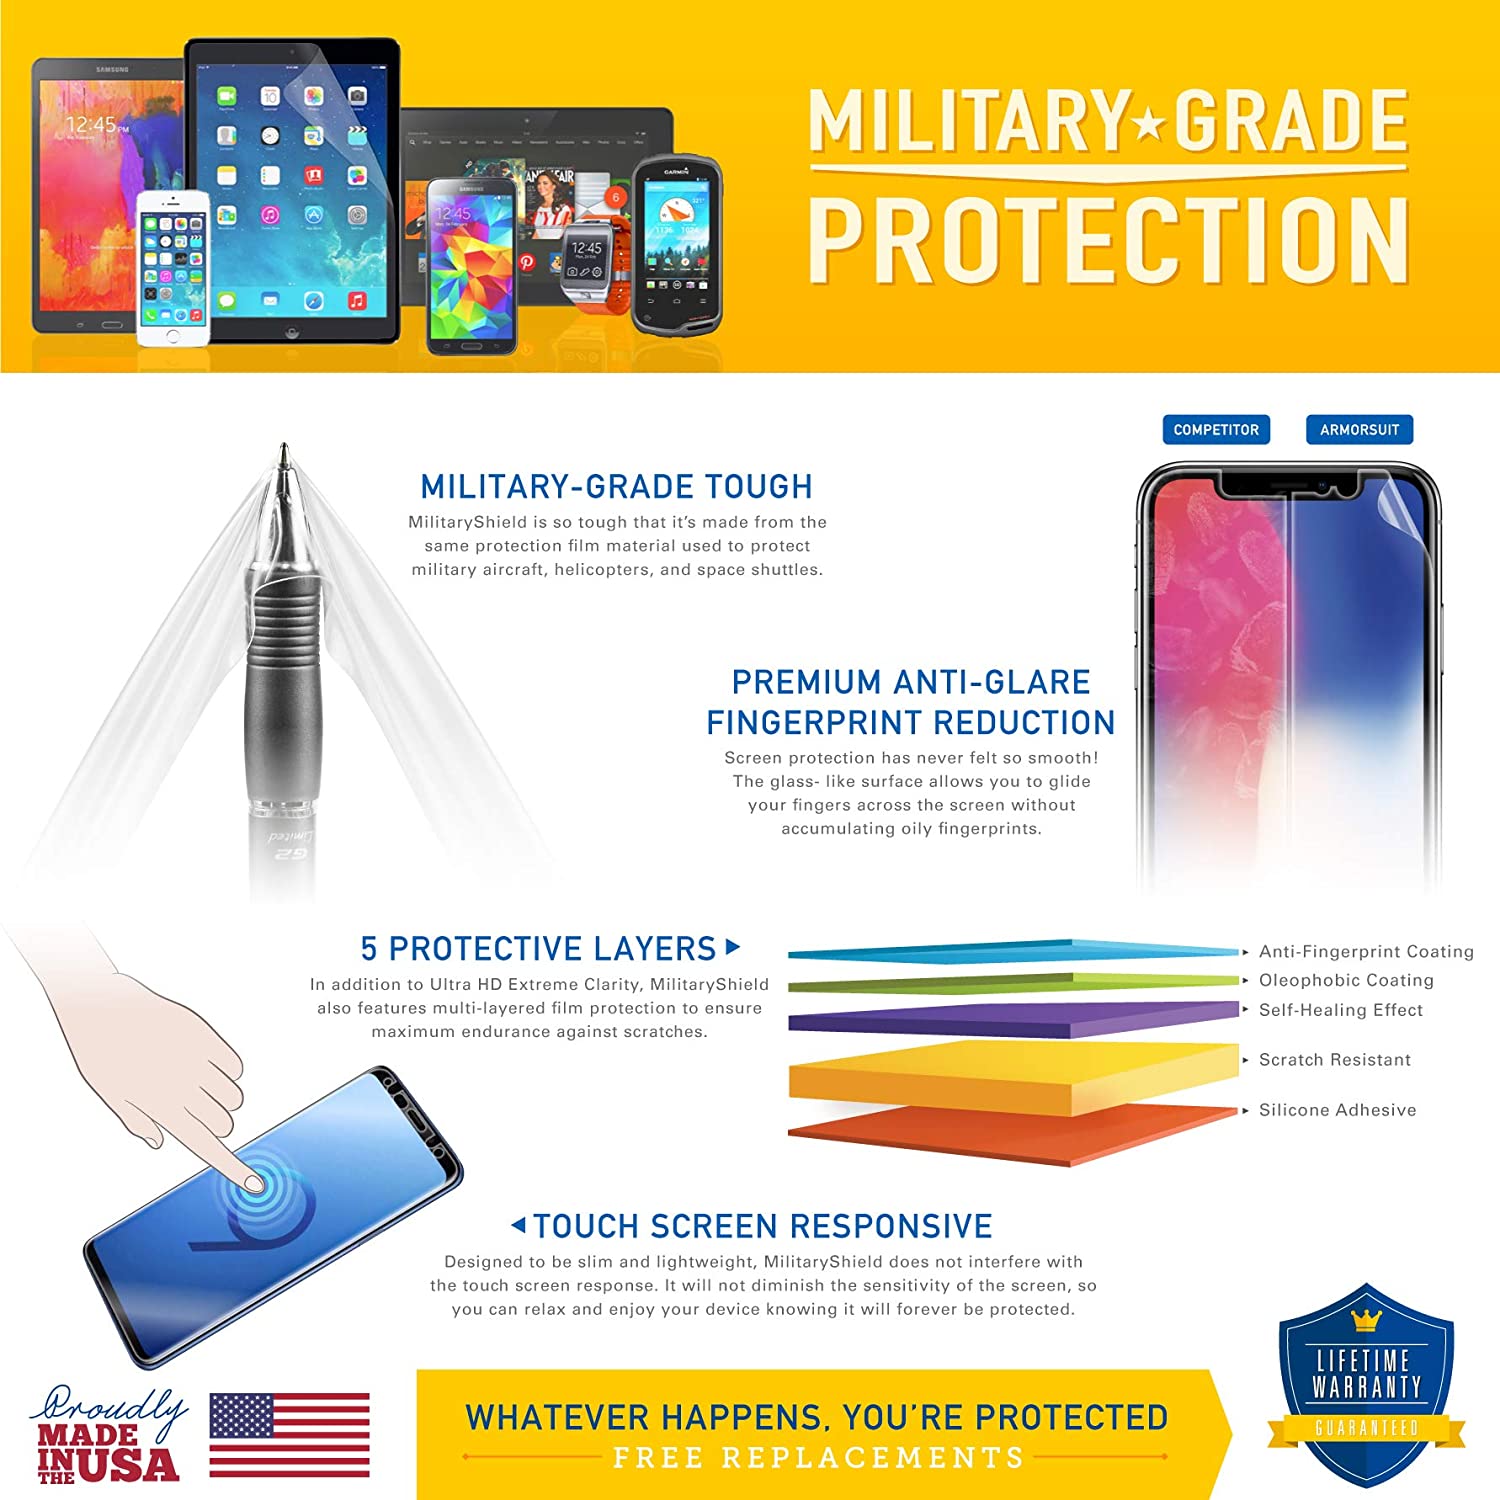 Samsung Galaxy S7 Edge Plus Screen Protector [Full Screen Coverage] + Black Carbon Fiber Skin